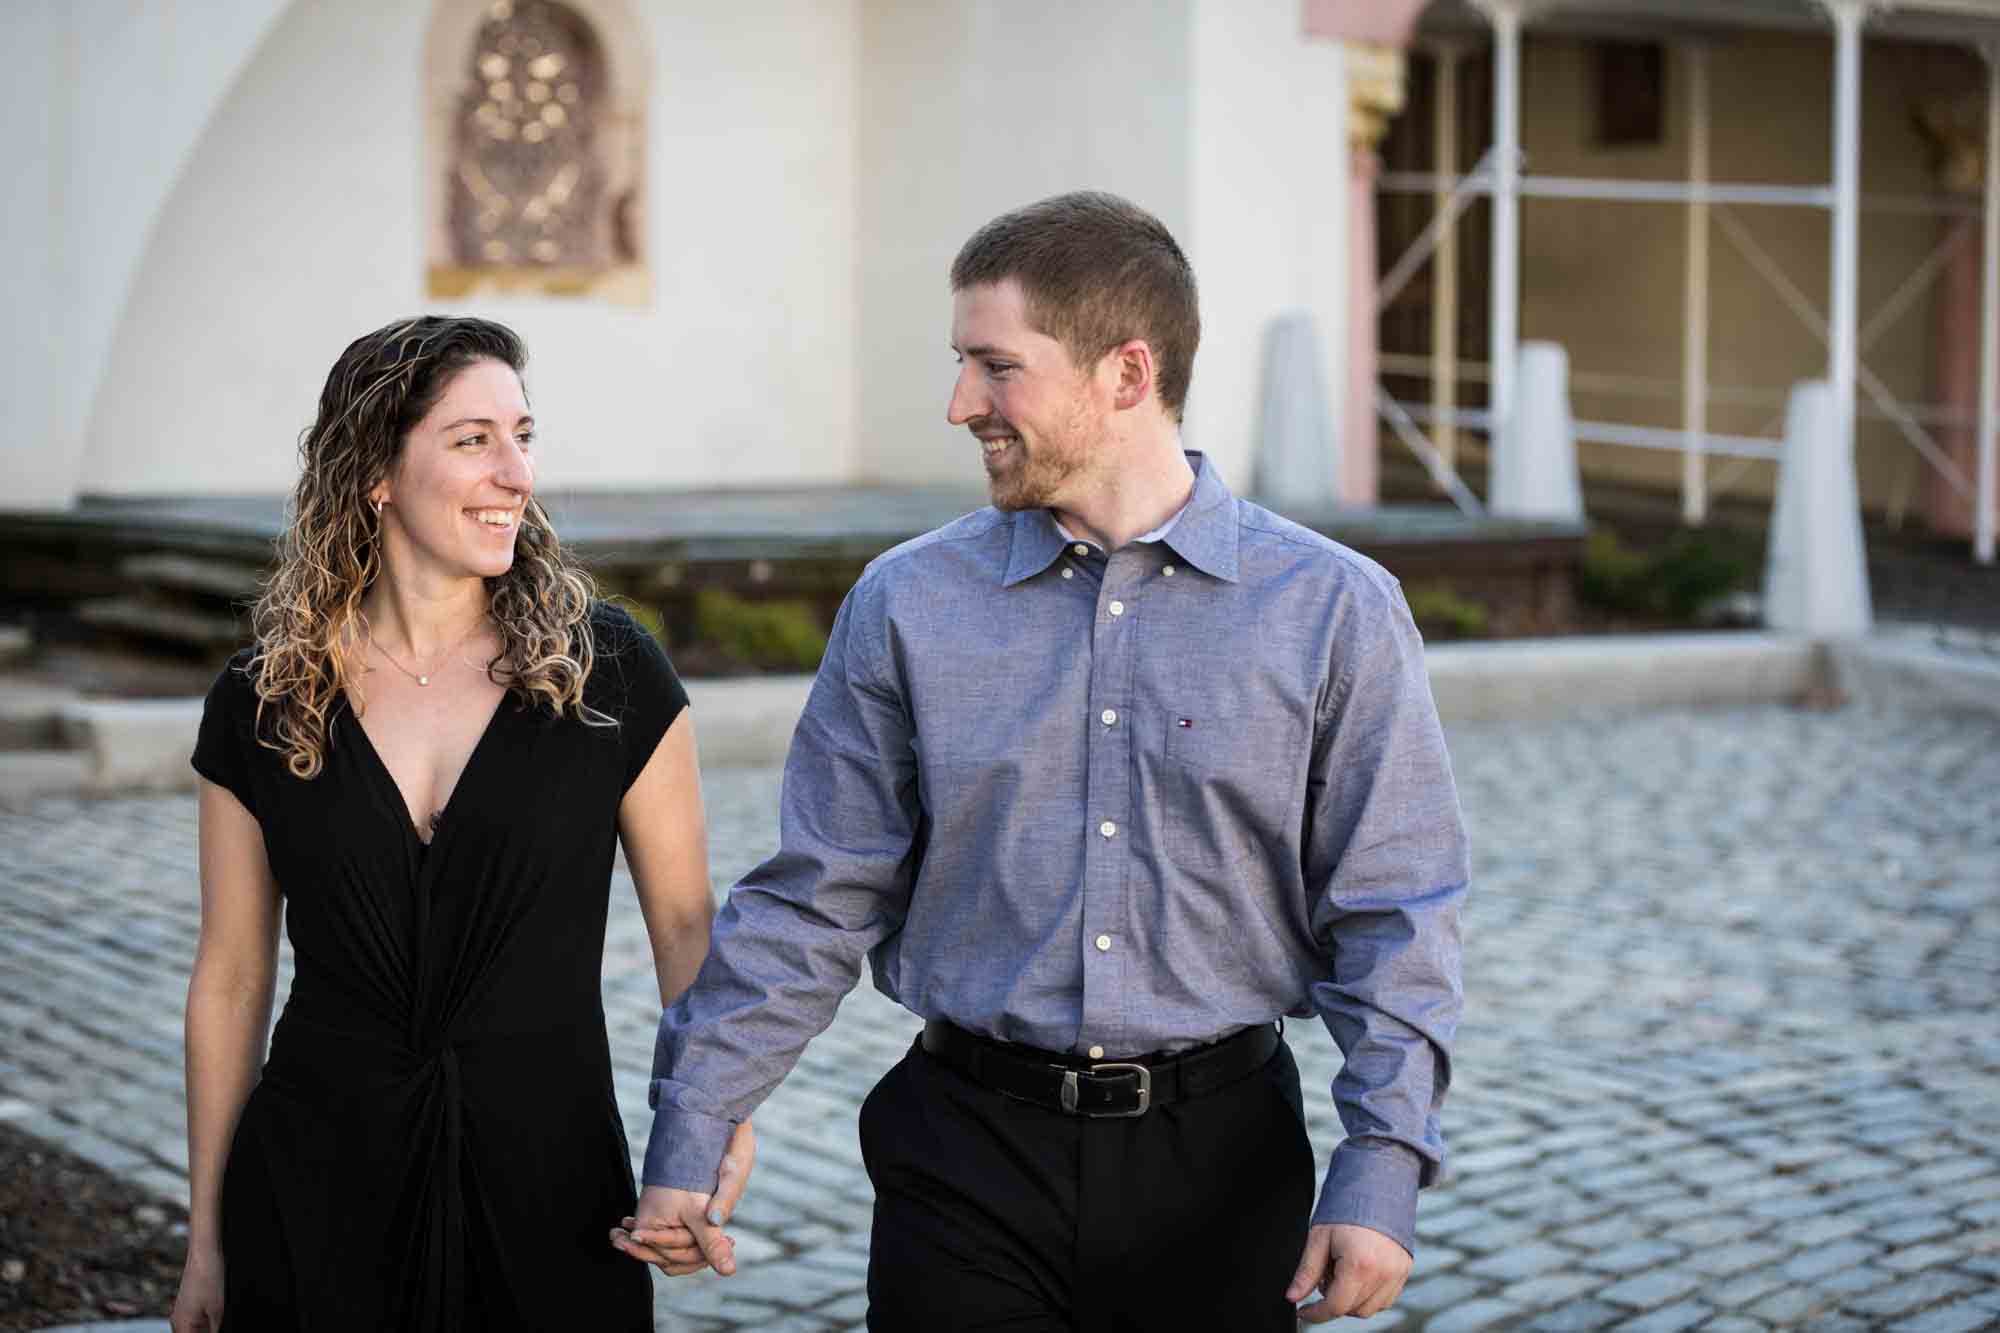 Couple holding hands walking across courtyard during a Vanderbilt Museum engagement photo shoot